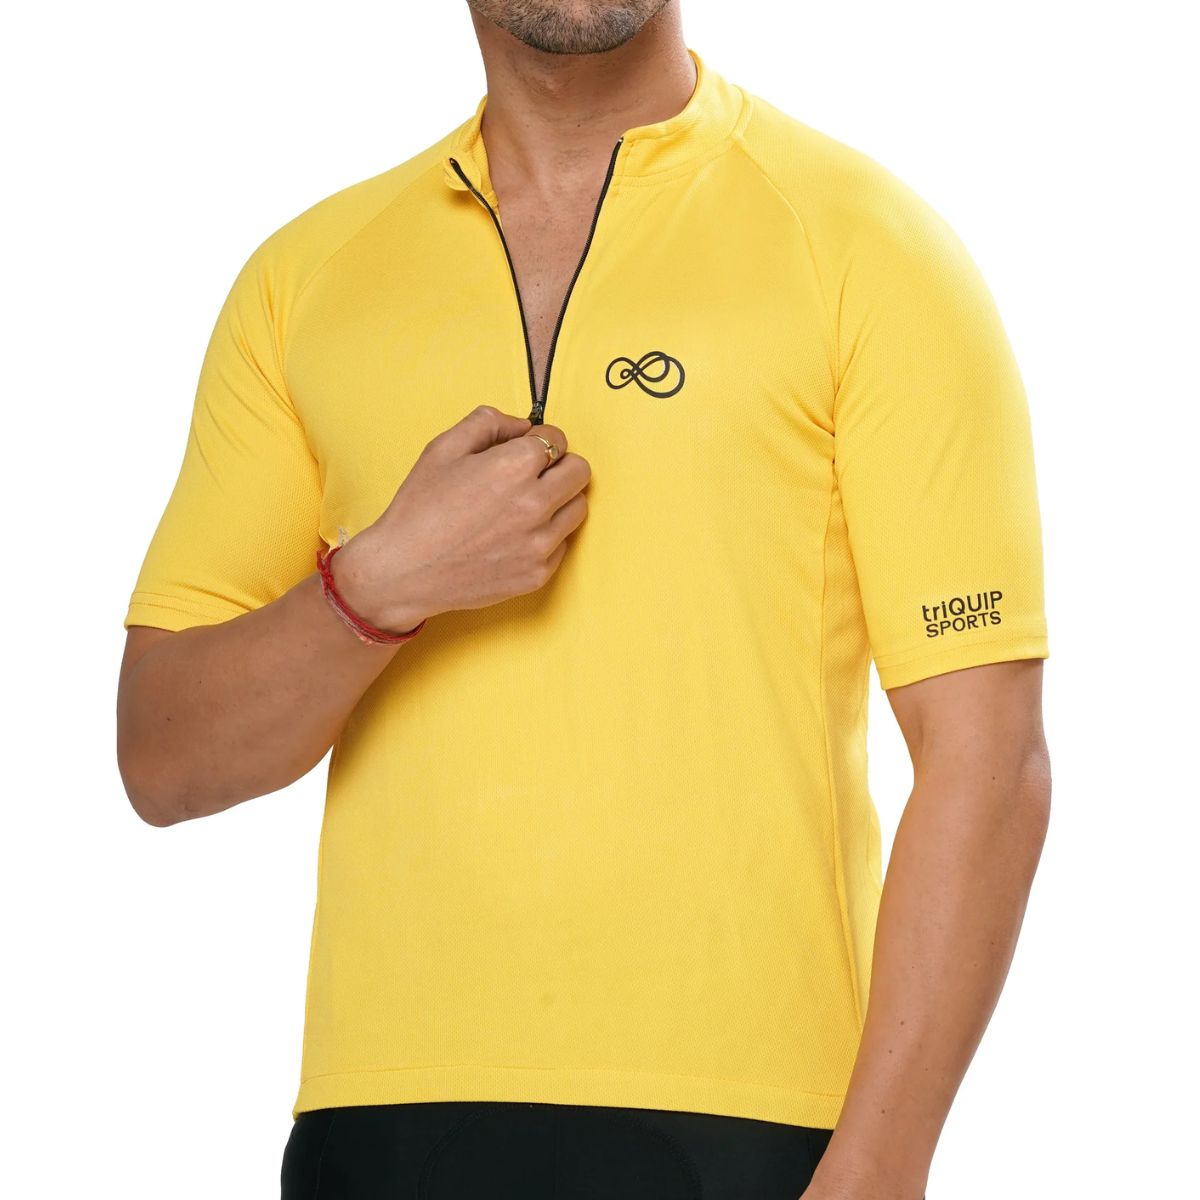 Mens Basic Cycling Jersey - Half Sleeves - Yellow 5